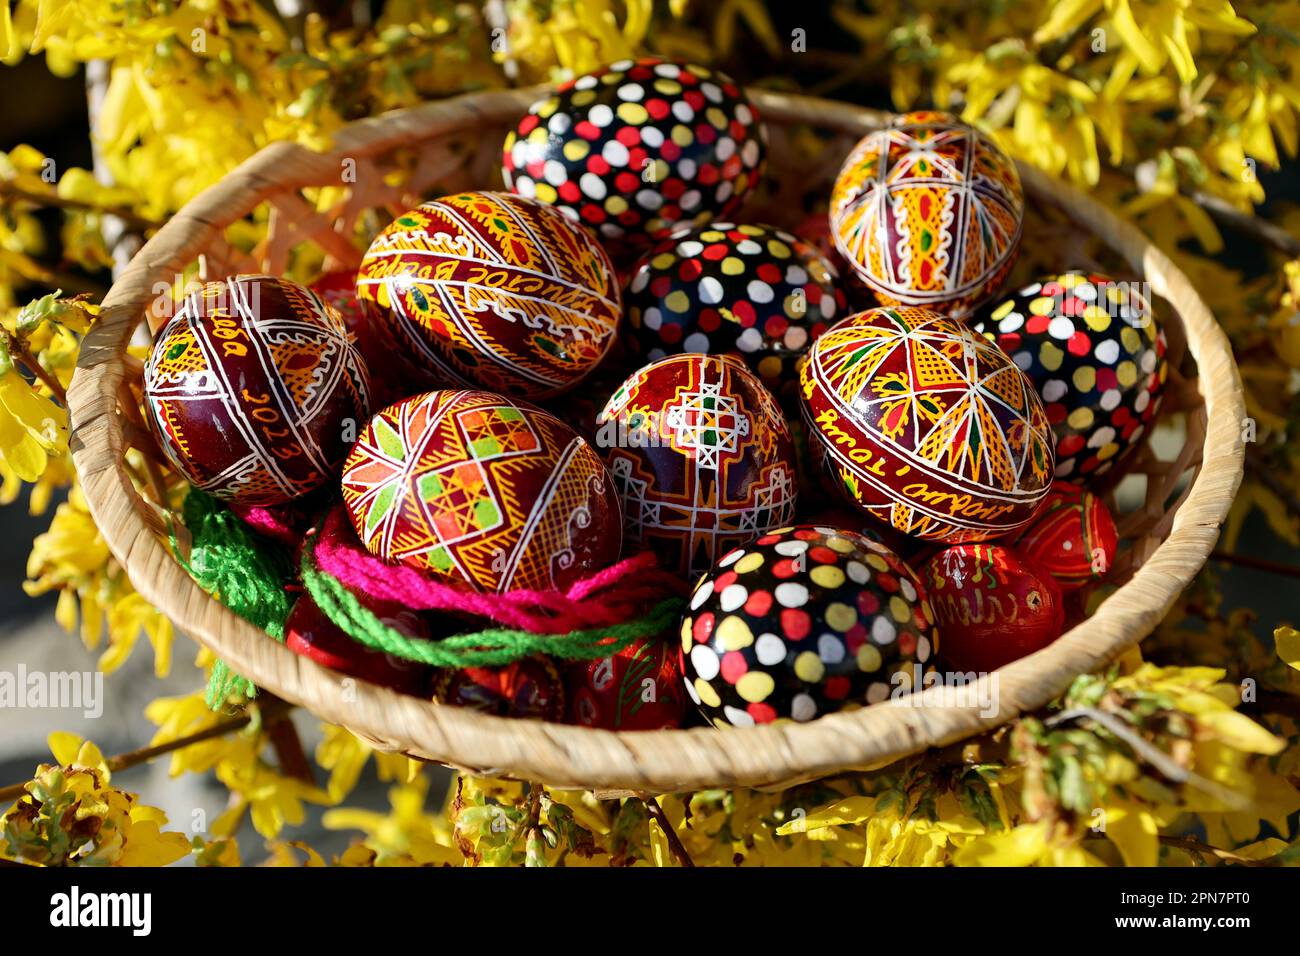 Baskets to Ukraine - Kinder Surprise Eggs Basket to Ukraine